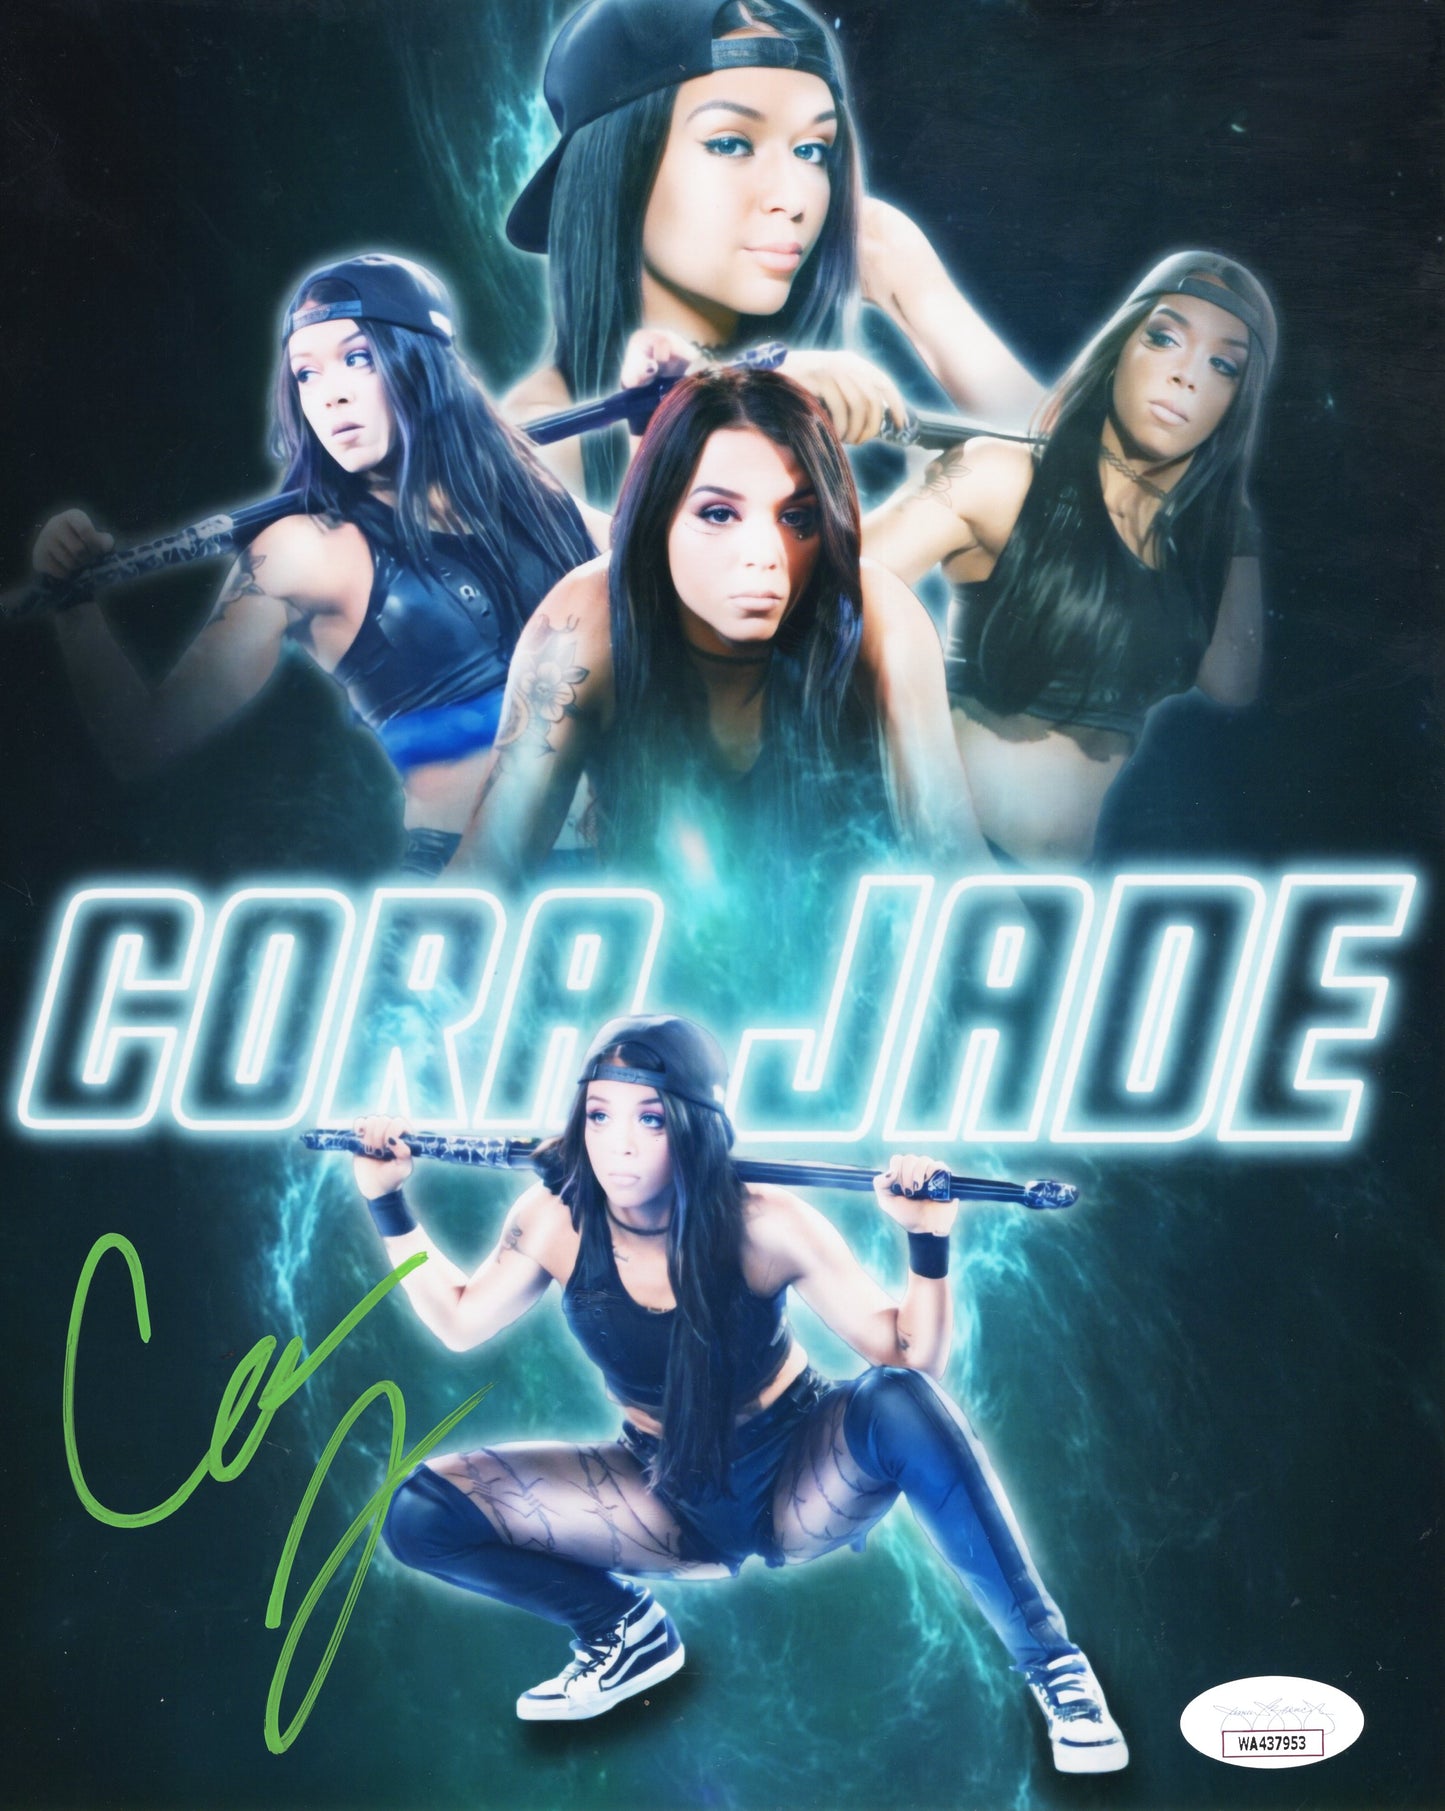 Cora Jade (metallic 8x10) NXT WWE photo signed auto autographed JSA